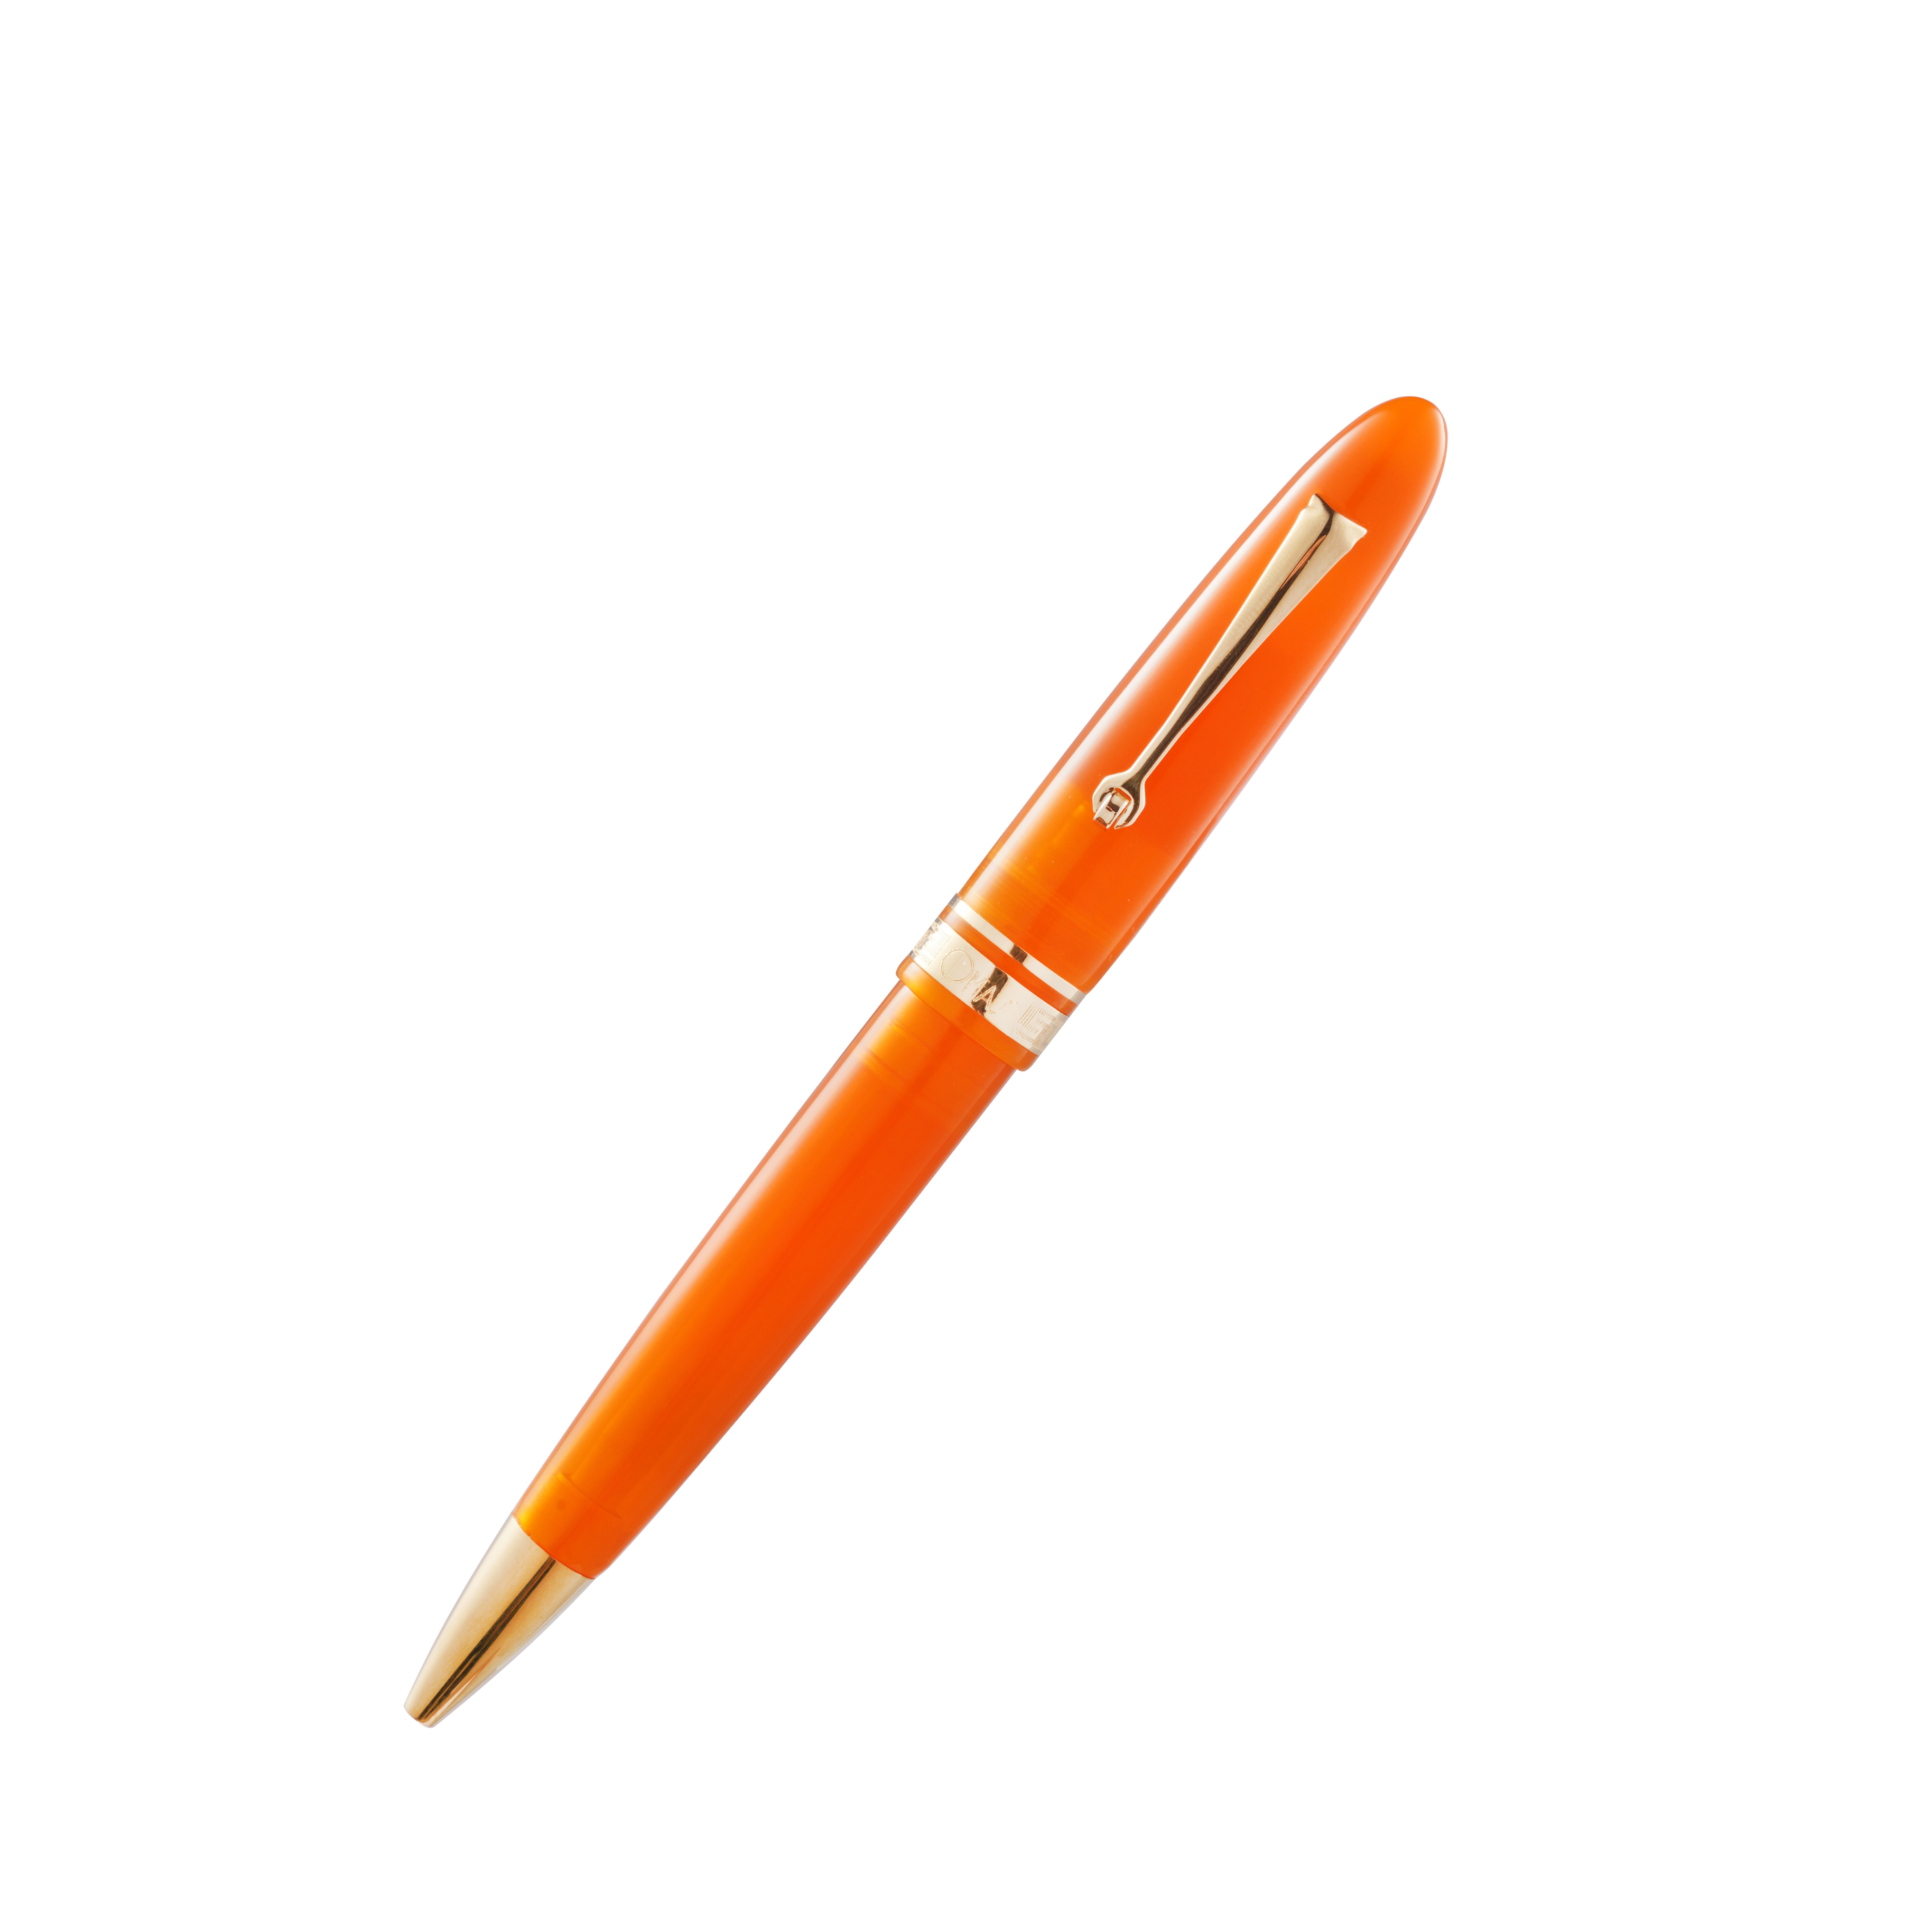 Omas Ogiva Ballpoint Pen in Arancione with Gold Trim